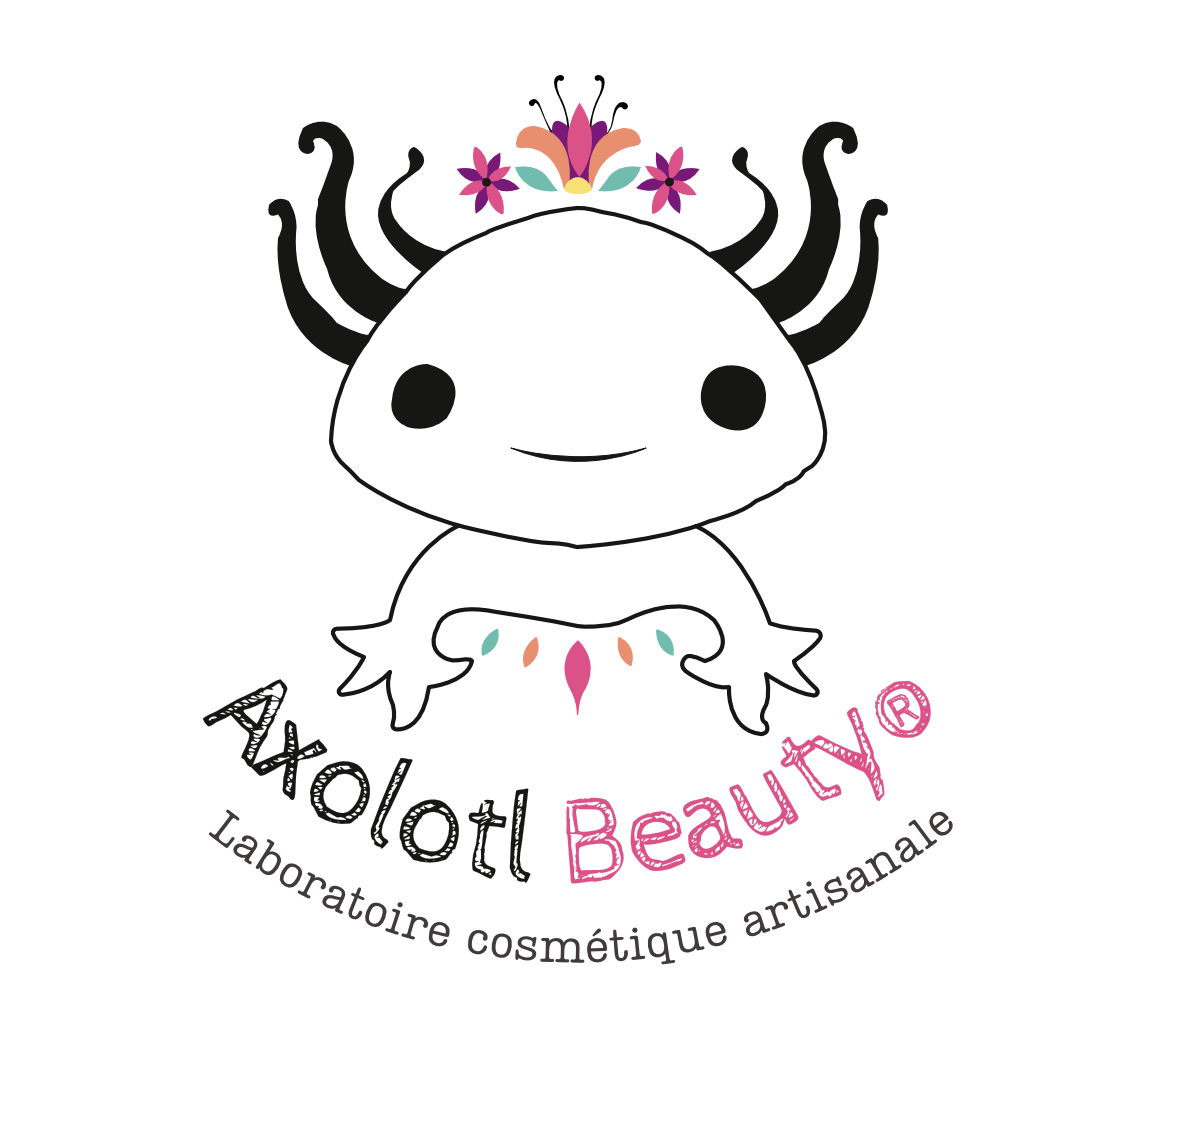 Axolotl Beauty	*